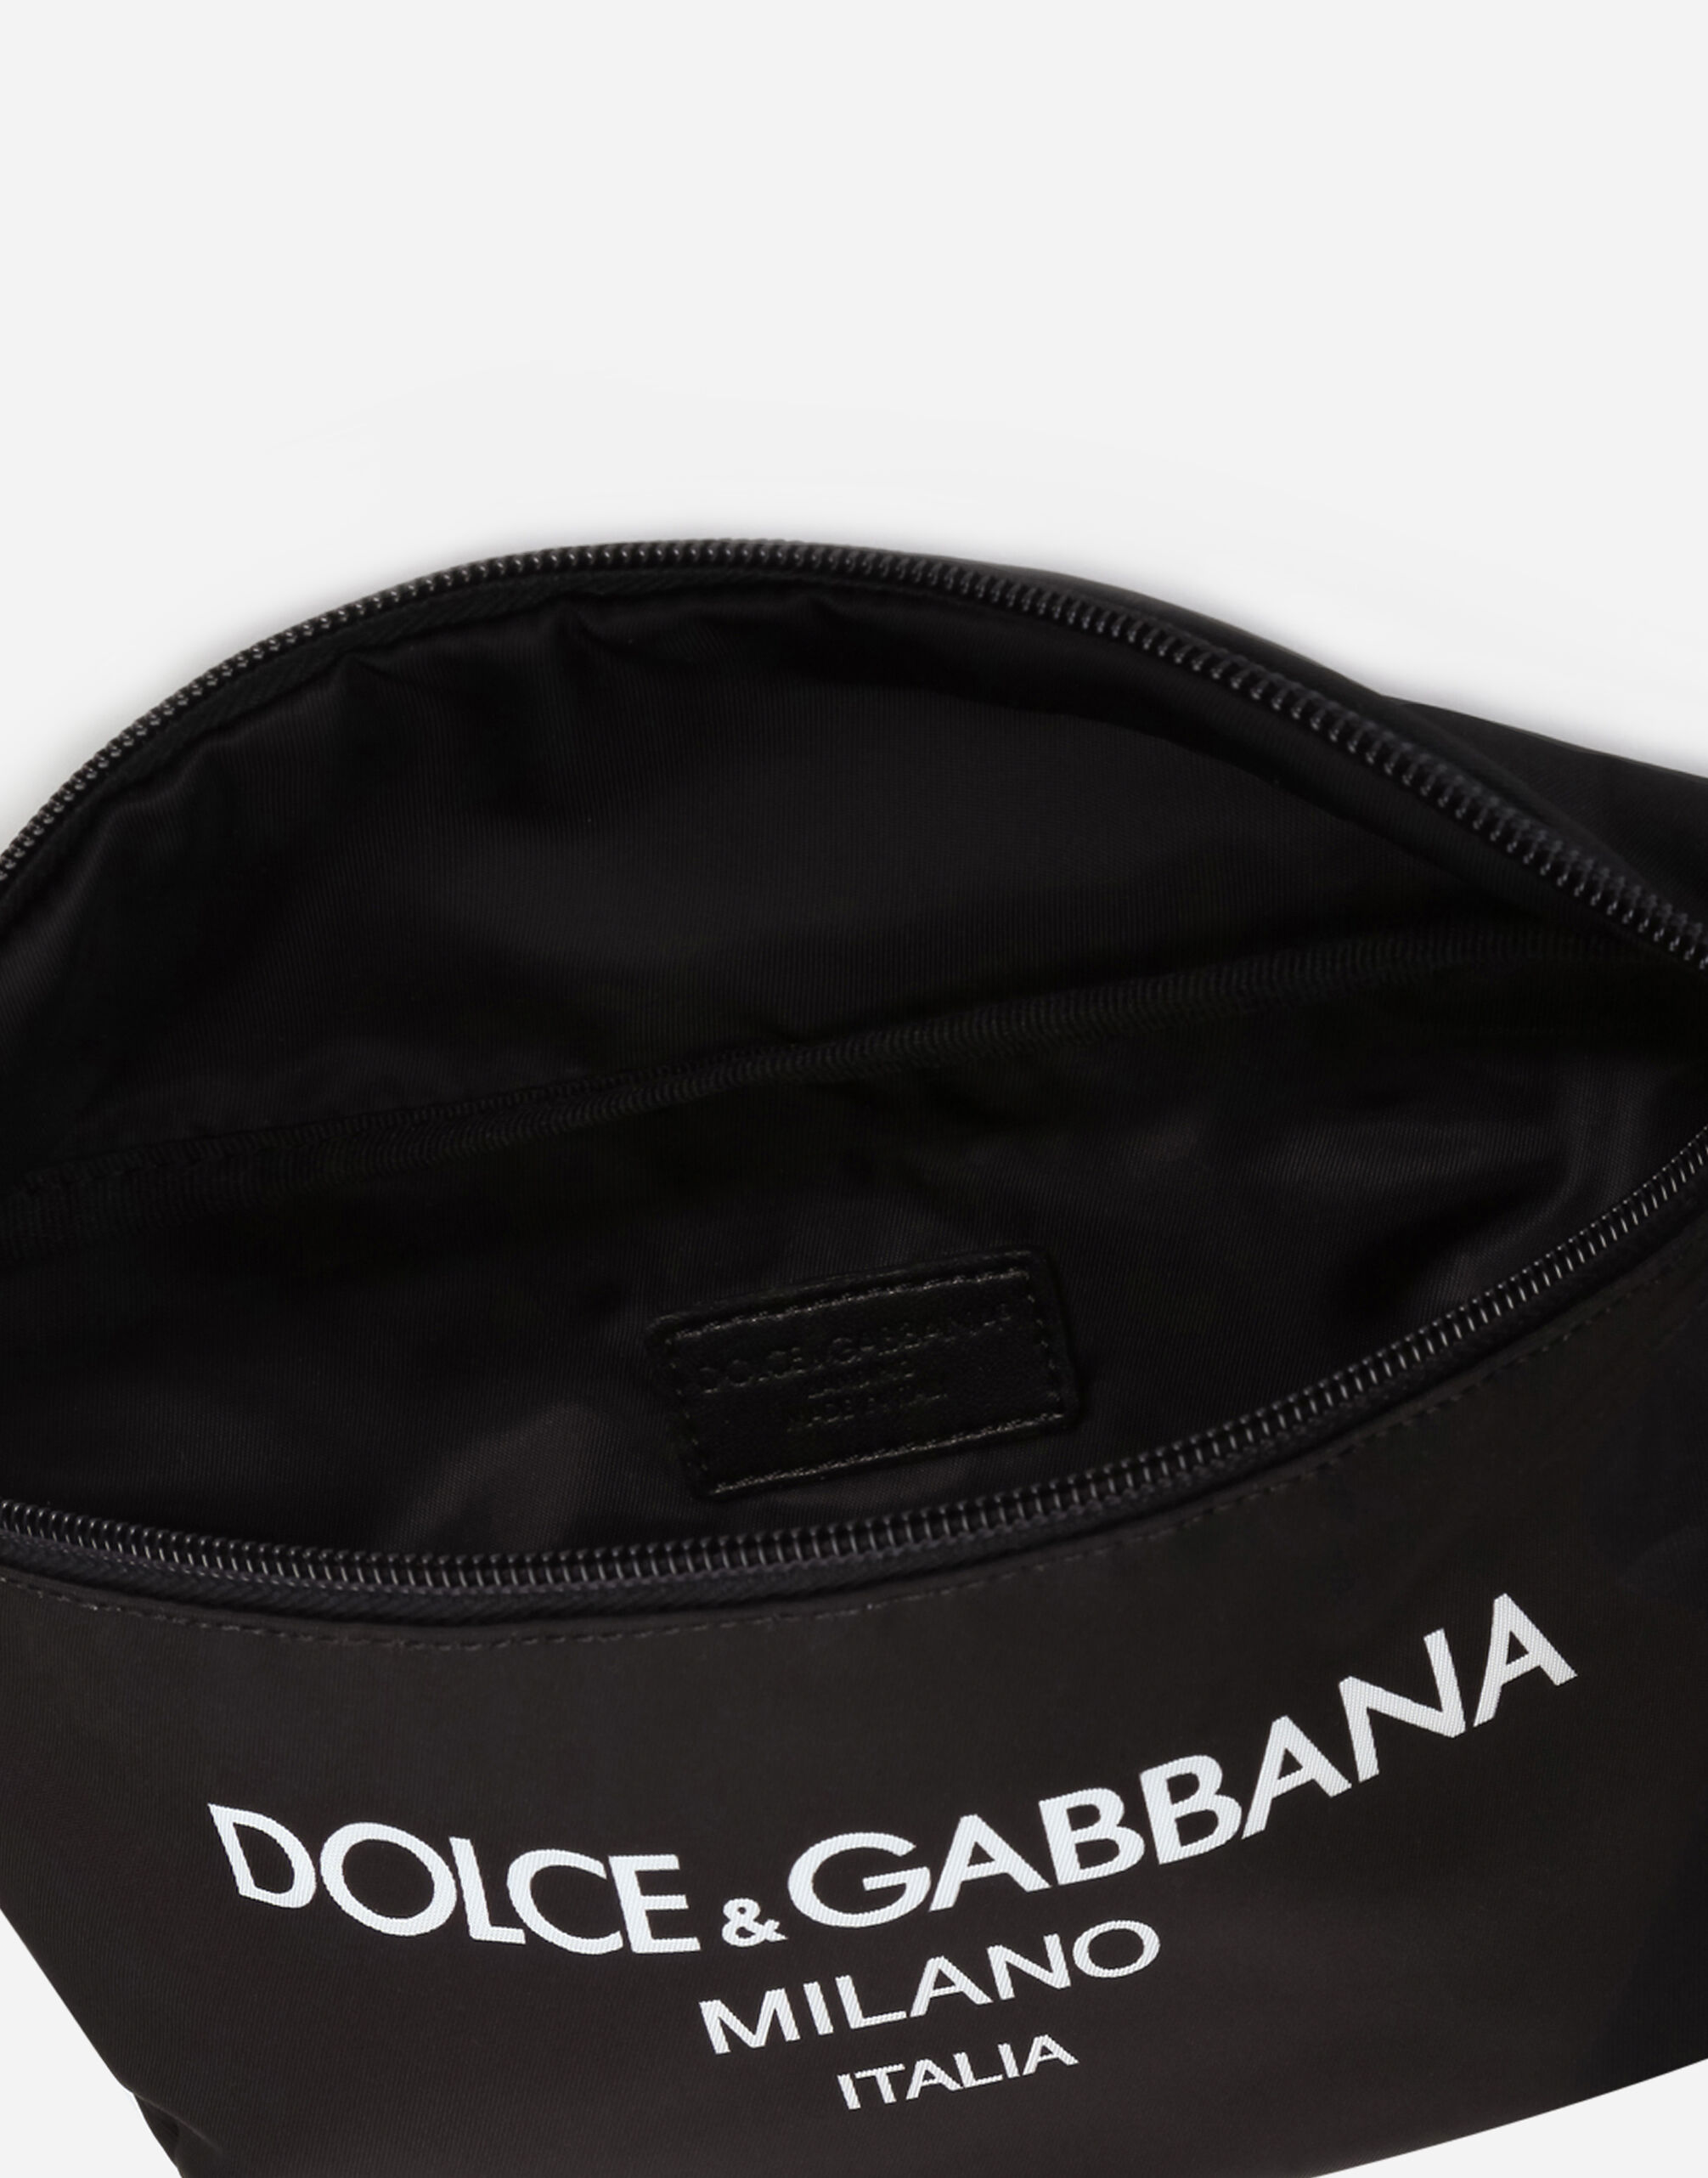 Nylon belt bag with dolce&gabbana milano logo